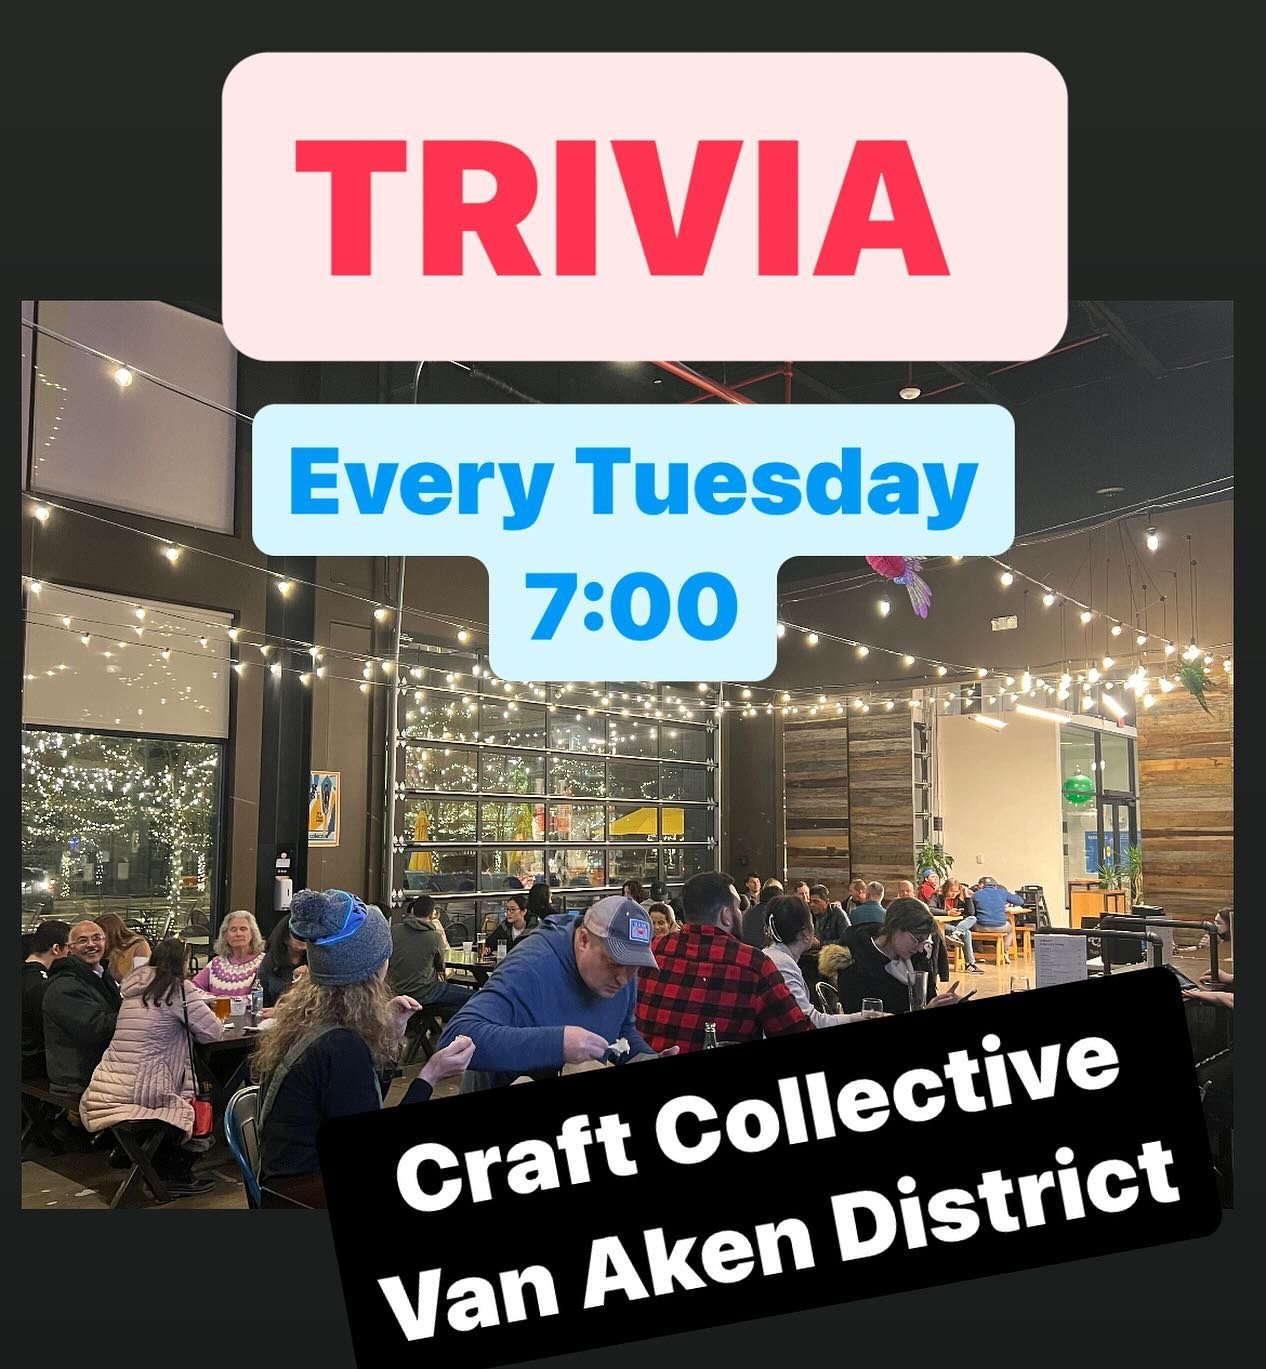 Round up the team! Trivia starts at 7:00!

#craftcollectivevanaken #shakerheights #trivia #craftbeer #craftcocktails #vanakendistrict